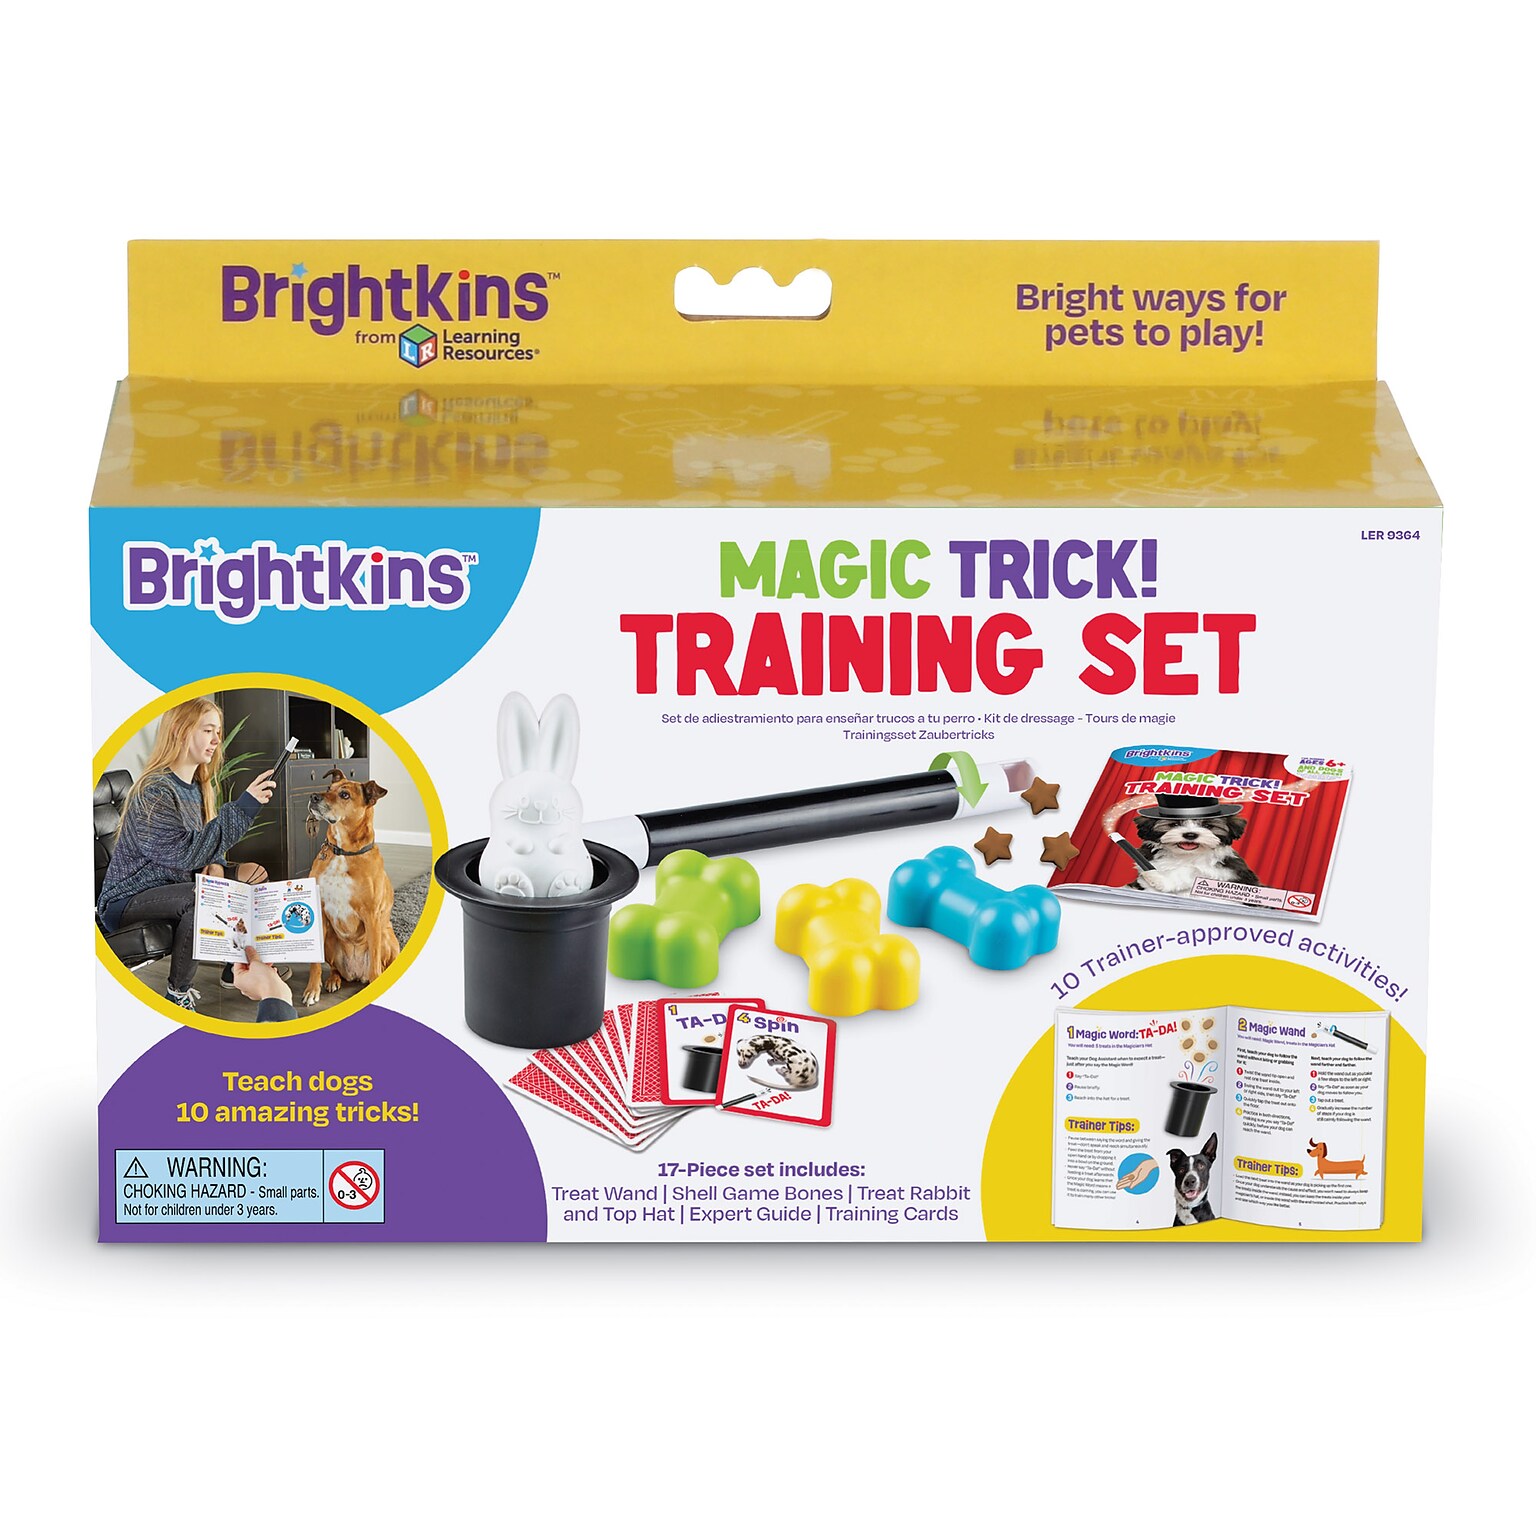 Brightkins Magic Trick! Training Set, Multicolored, 6 Pieces (LER9364)